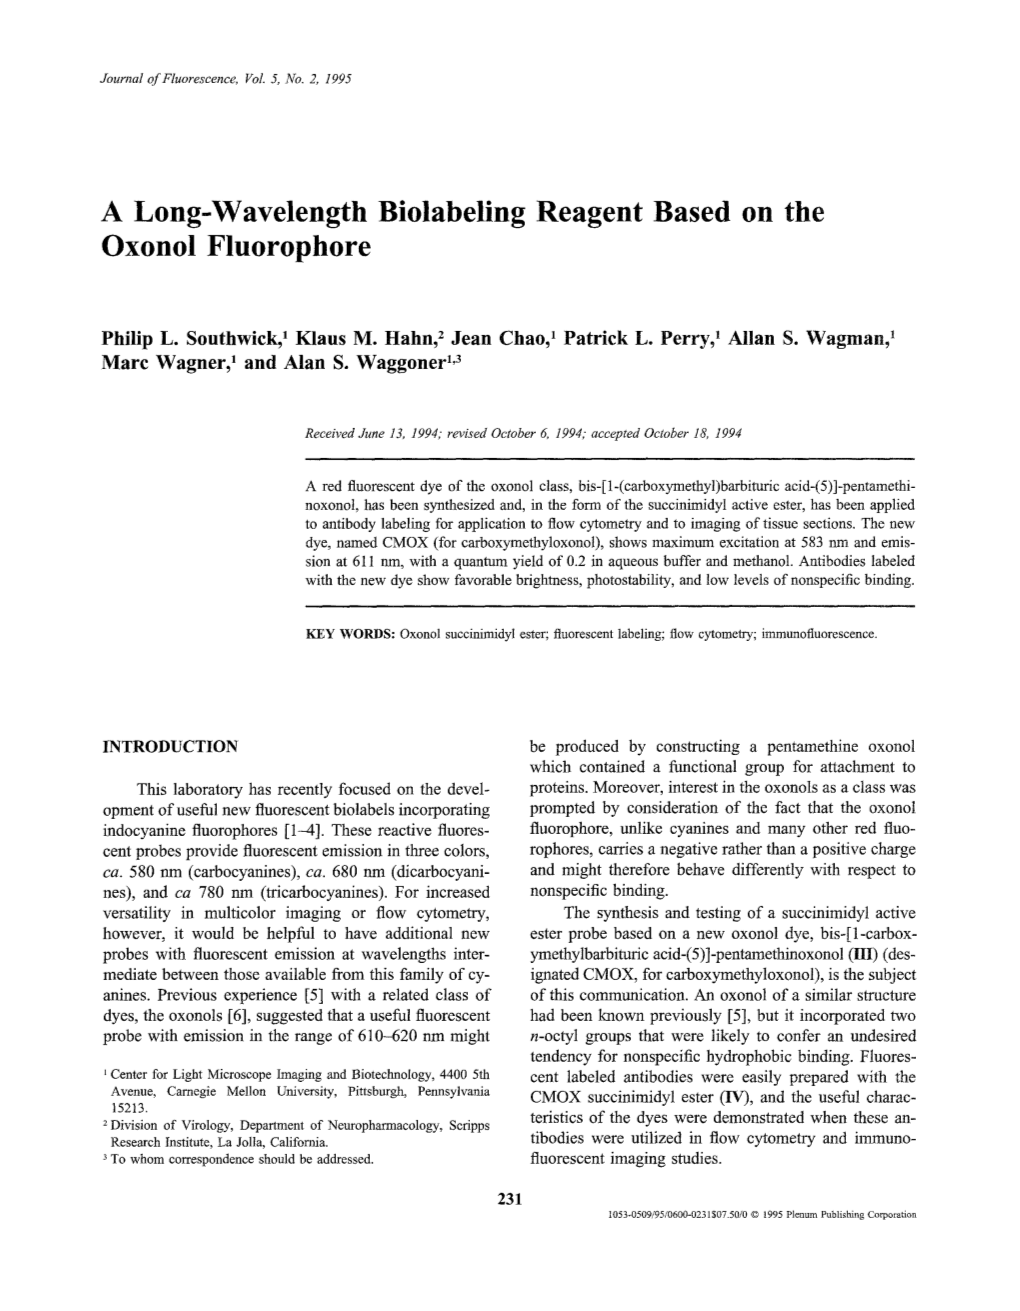 A Long-Wavelength Biolabeling Reagent Based on the Oxonol Fluorophore